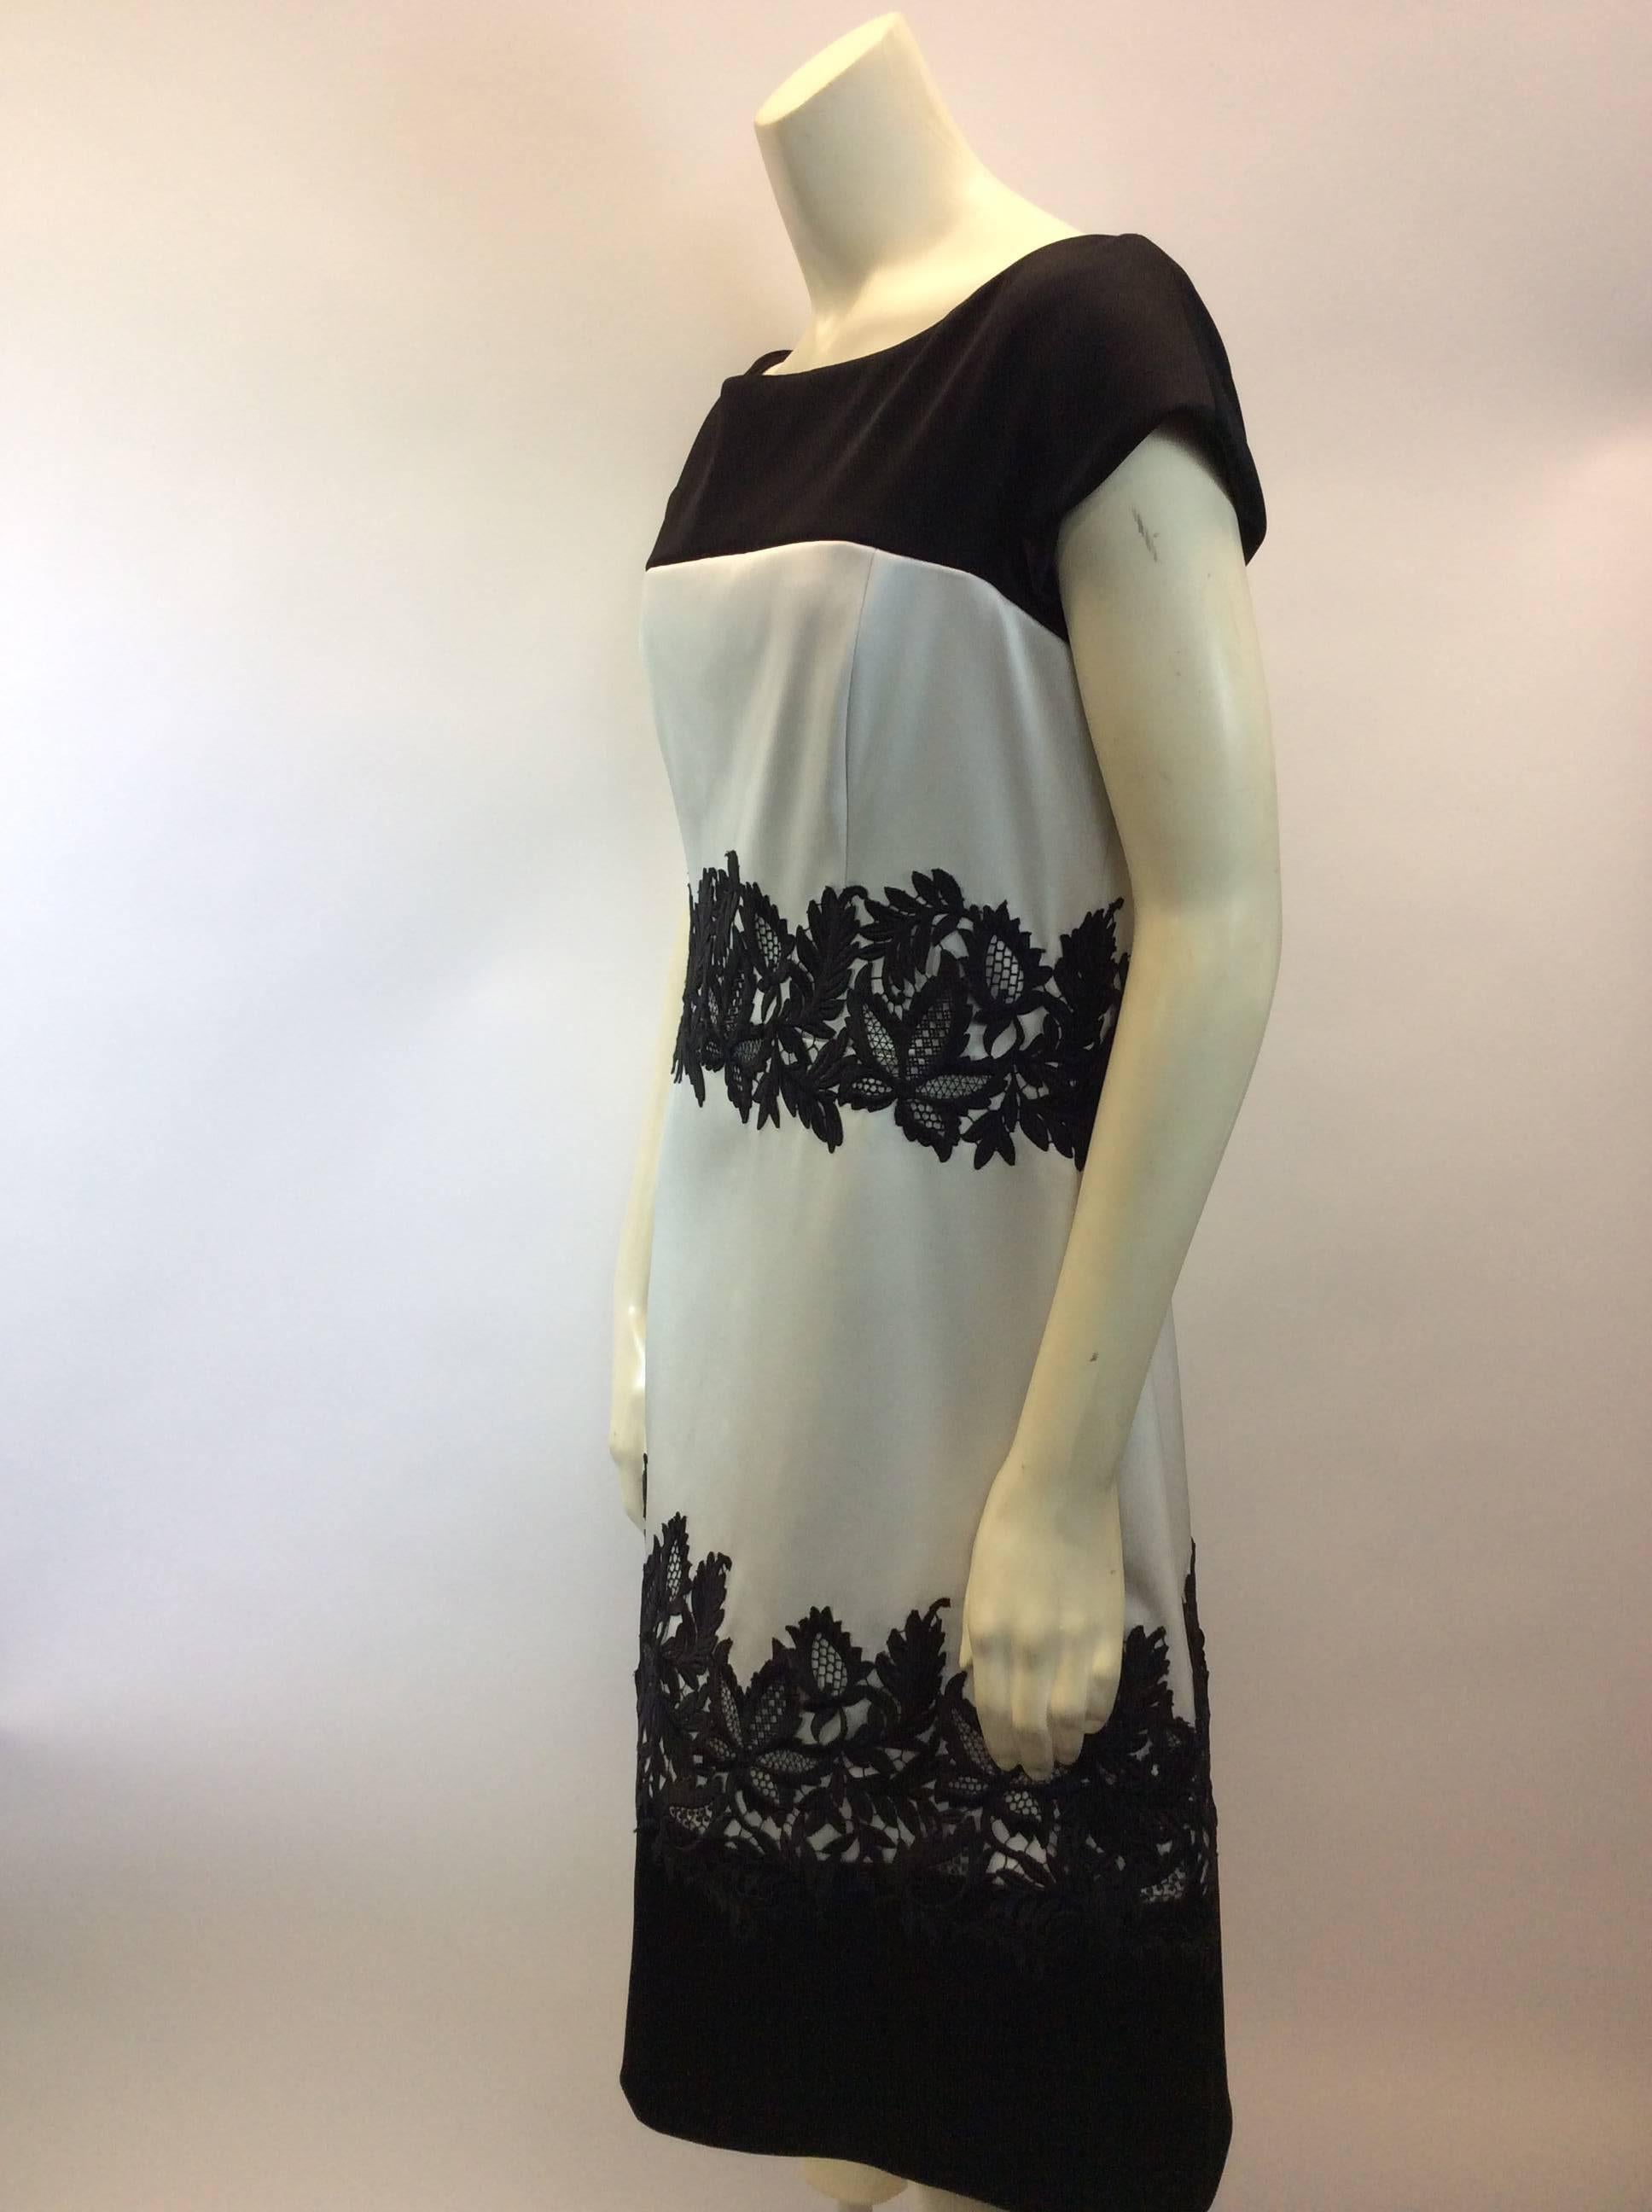 J. Mendel White and Black Lace Dress
Size 10
Length 38.5